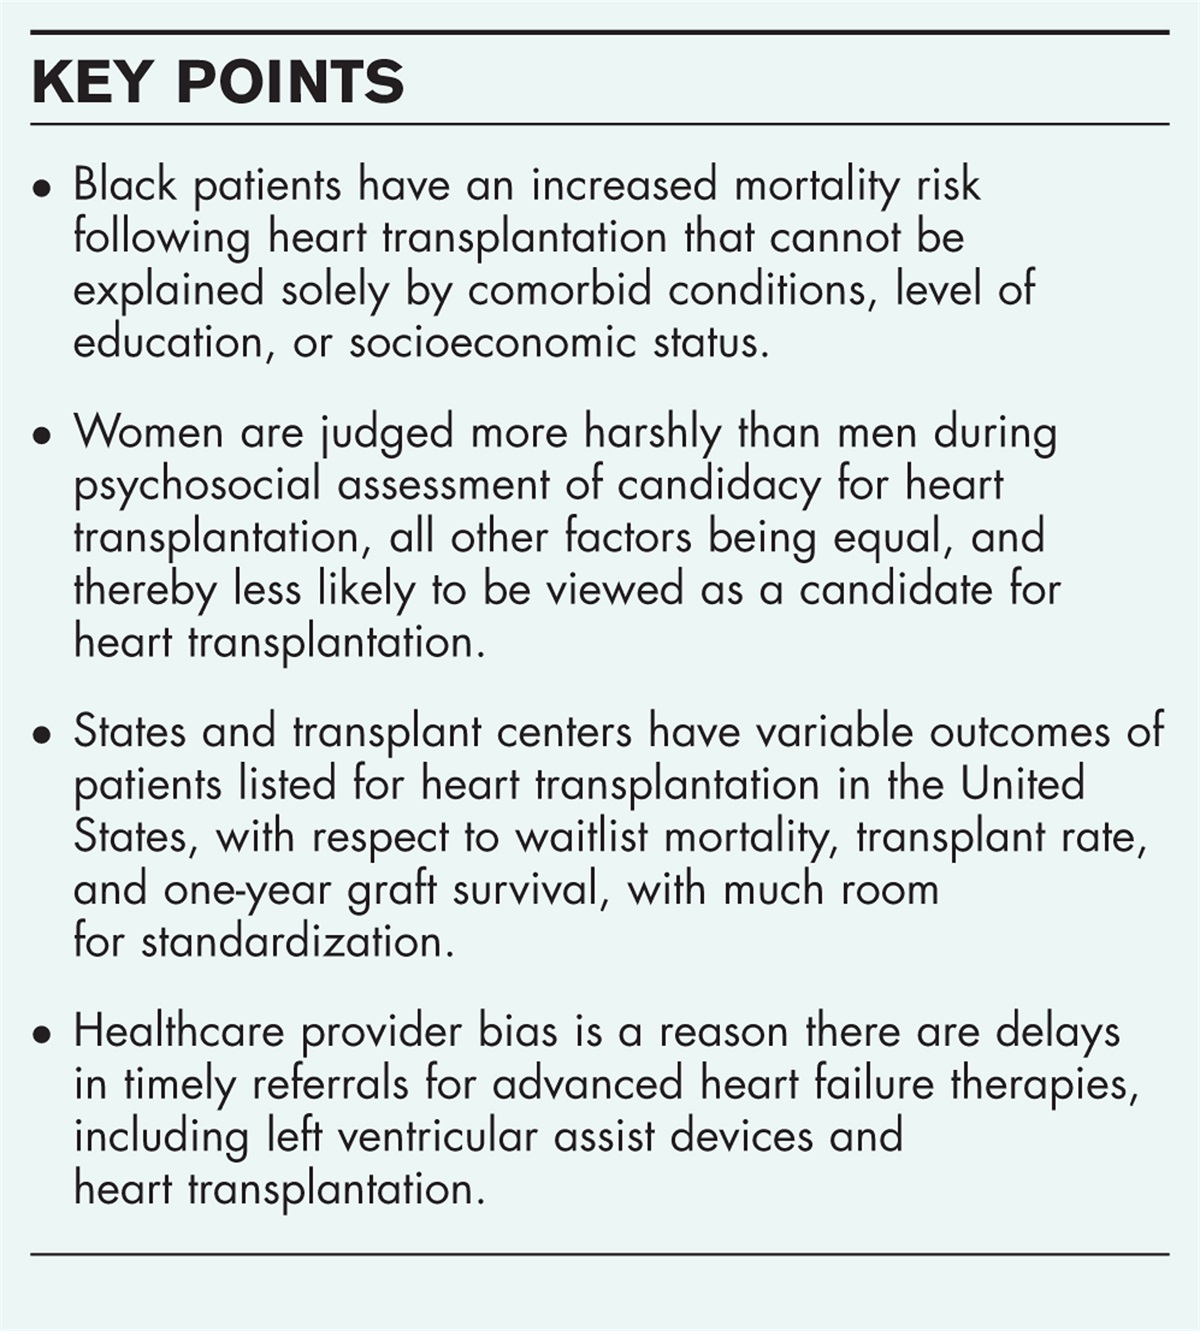 Disparities in heart transplantation